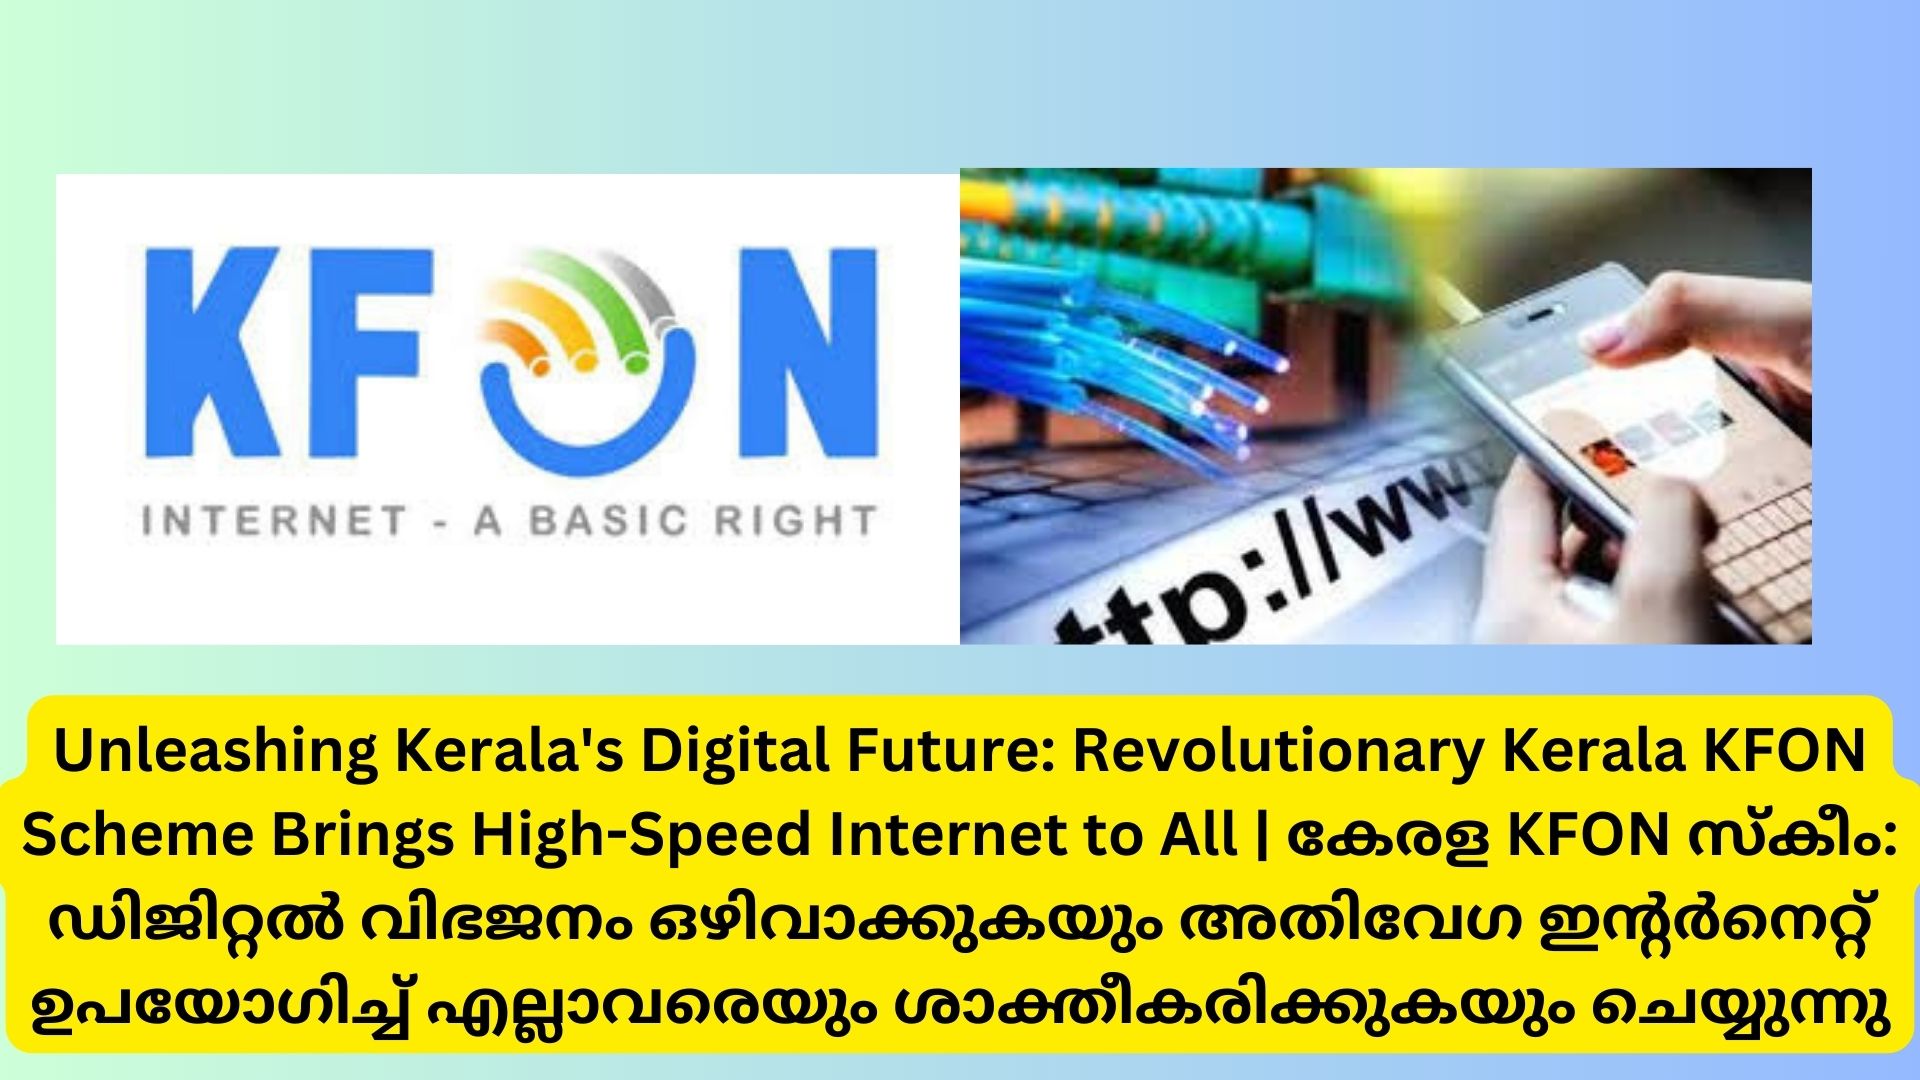 Unleashing Kerala's Digital Future: Revolutionary Kerala KFON Scheme Brings High-Speed Internet to All | കേരള KFON സ്കീം: ഡിജിറ്റൽ വിഭജനം ഒഴിവാക്കുകയും അതിവേഗ ഇൻ്റർനെറ്റ് ഉപയോഗിച്ച് എല്ലാവരെയും ശാക്തീകരിക്കുകയും ചെയ്യുന്നു